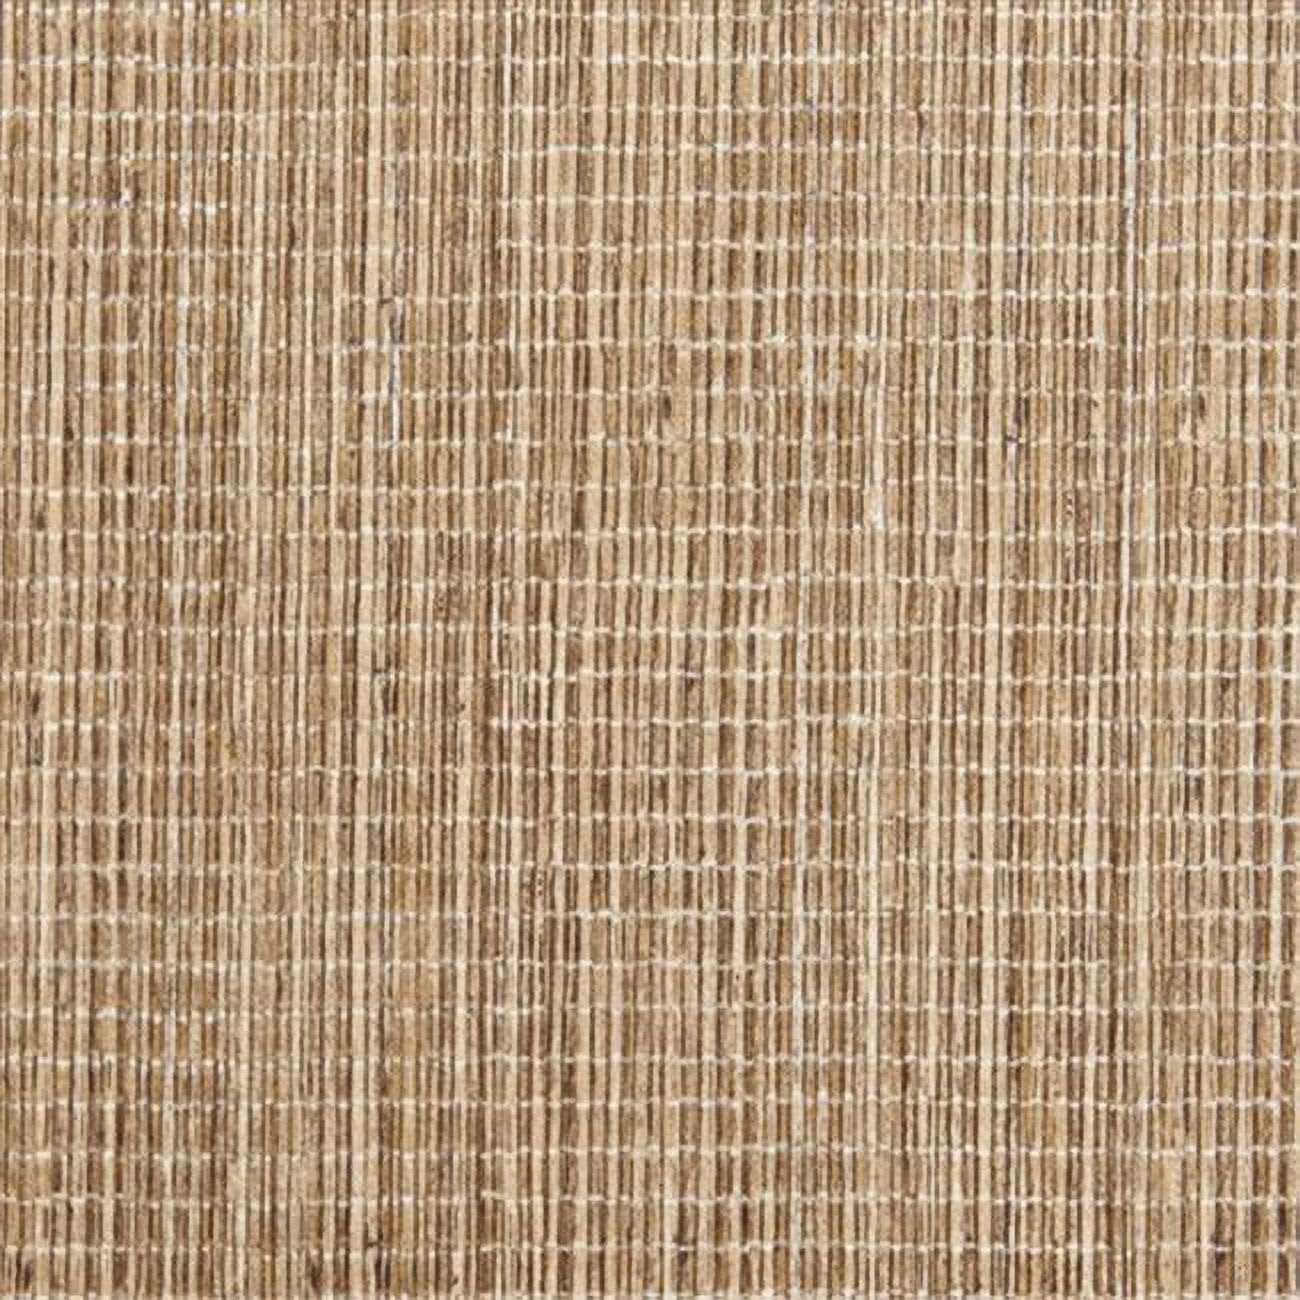 Designer Fabrics U0050C 54 in. Wide Tan Smooth Bamboo Upholstery Fabric - image 1 of 1